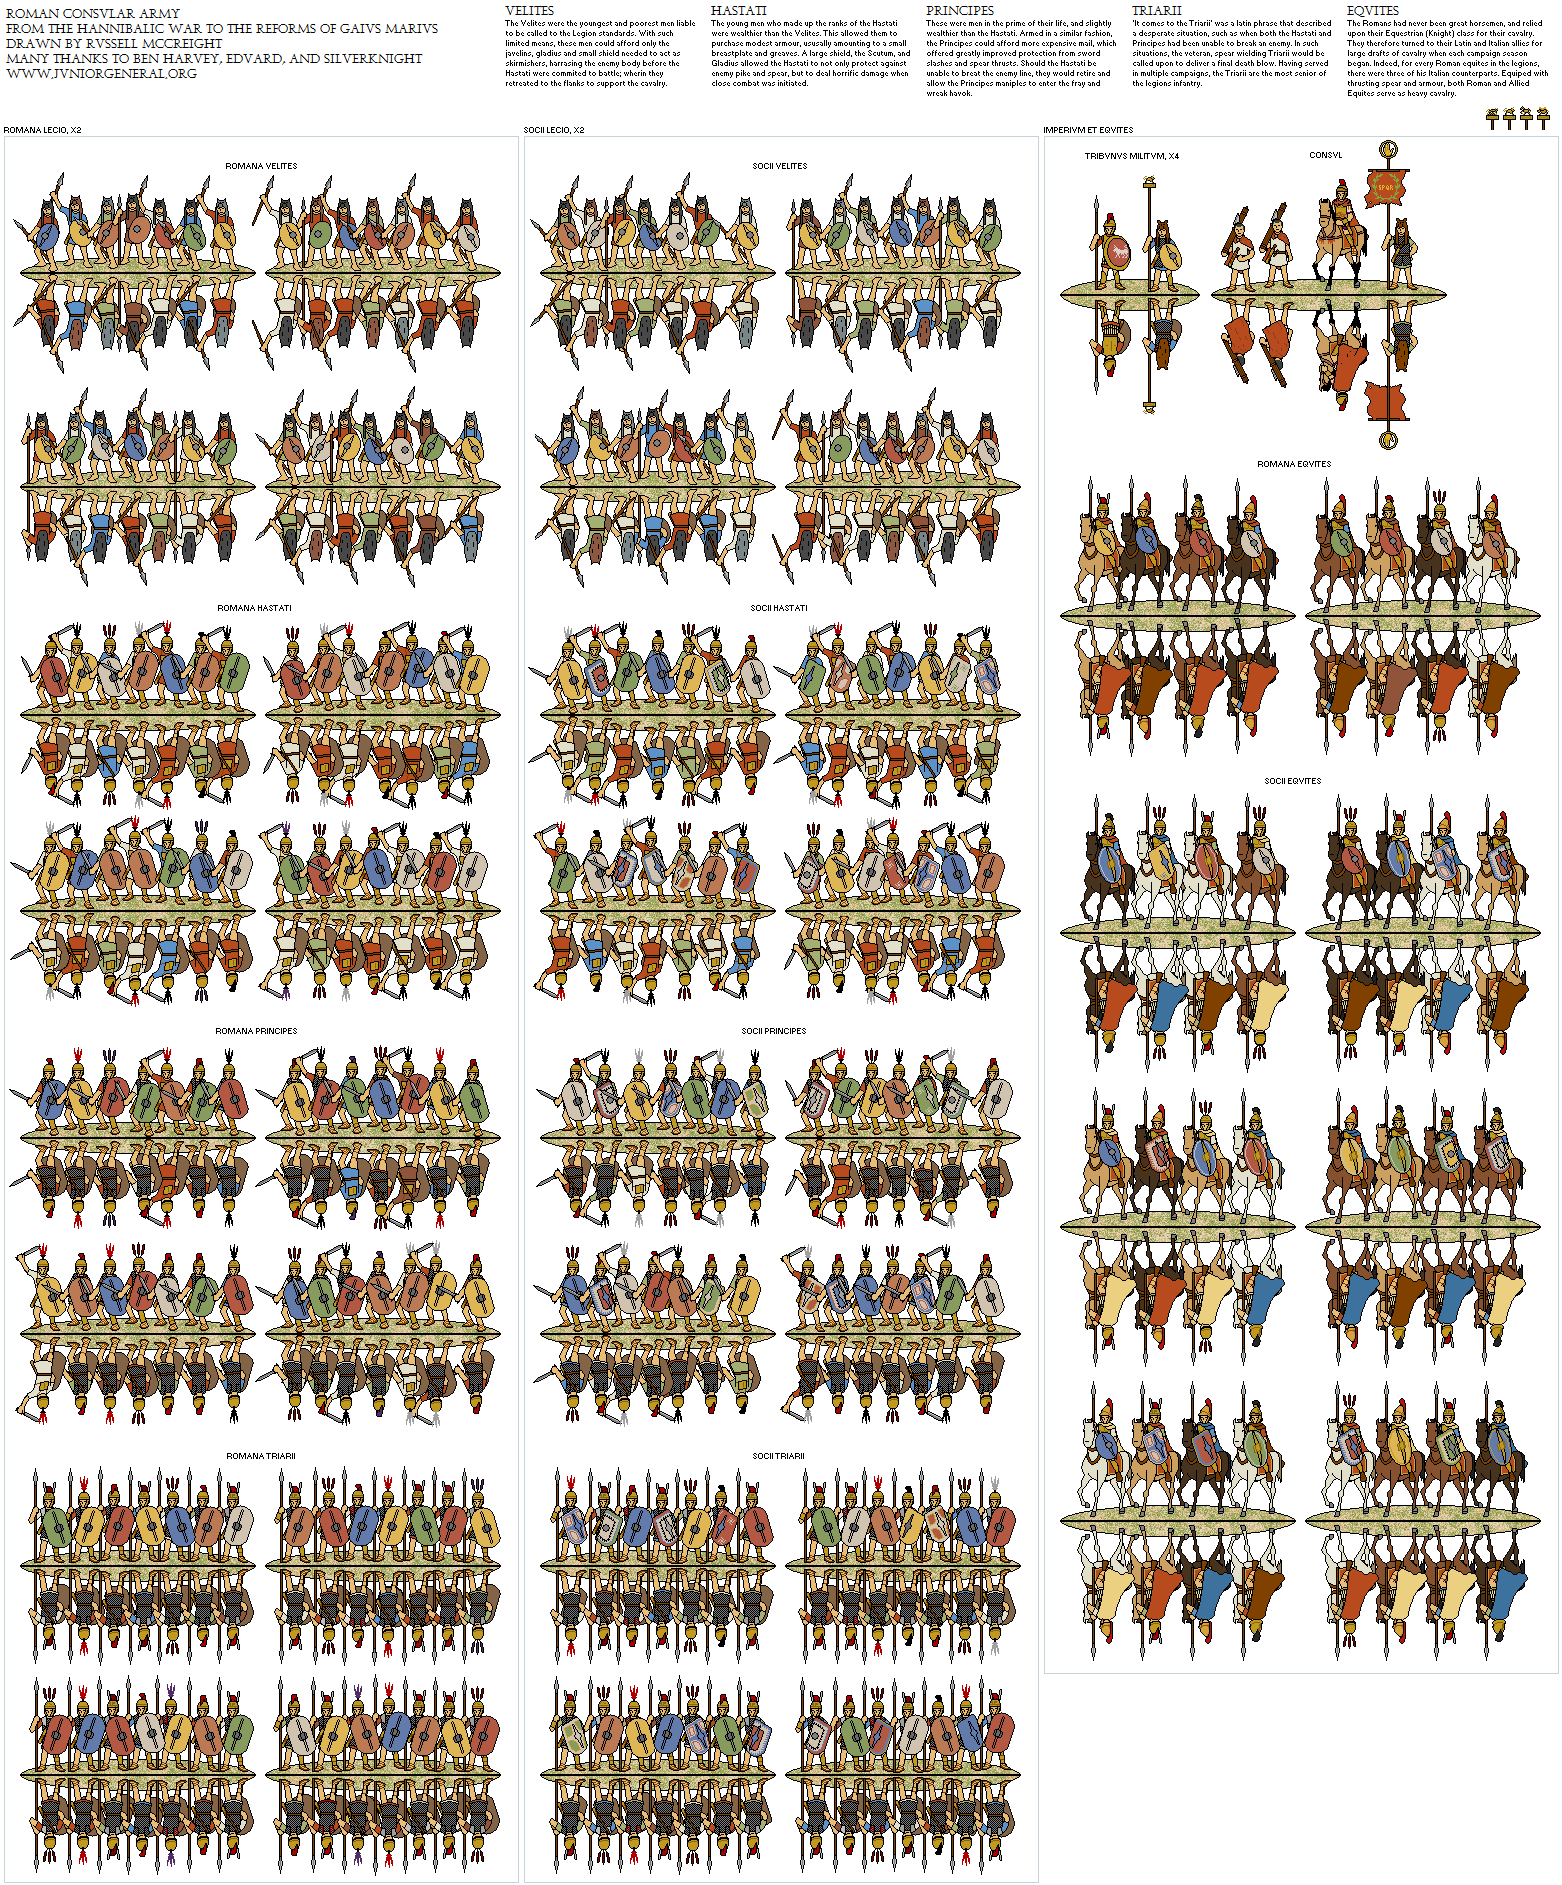 Roman Consular Army